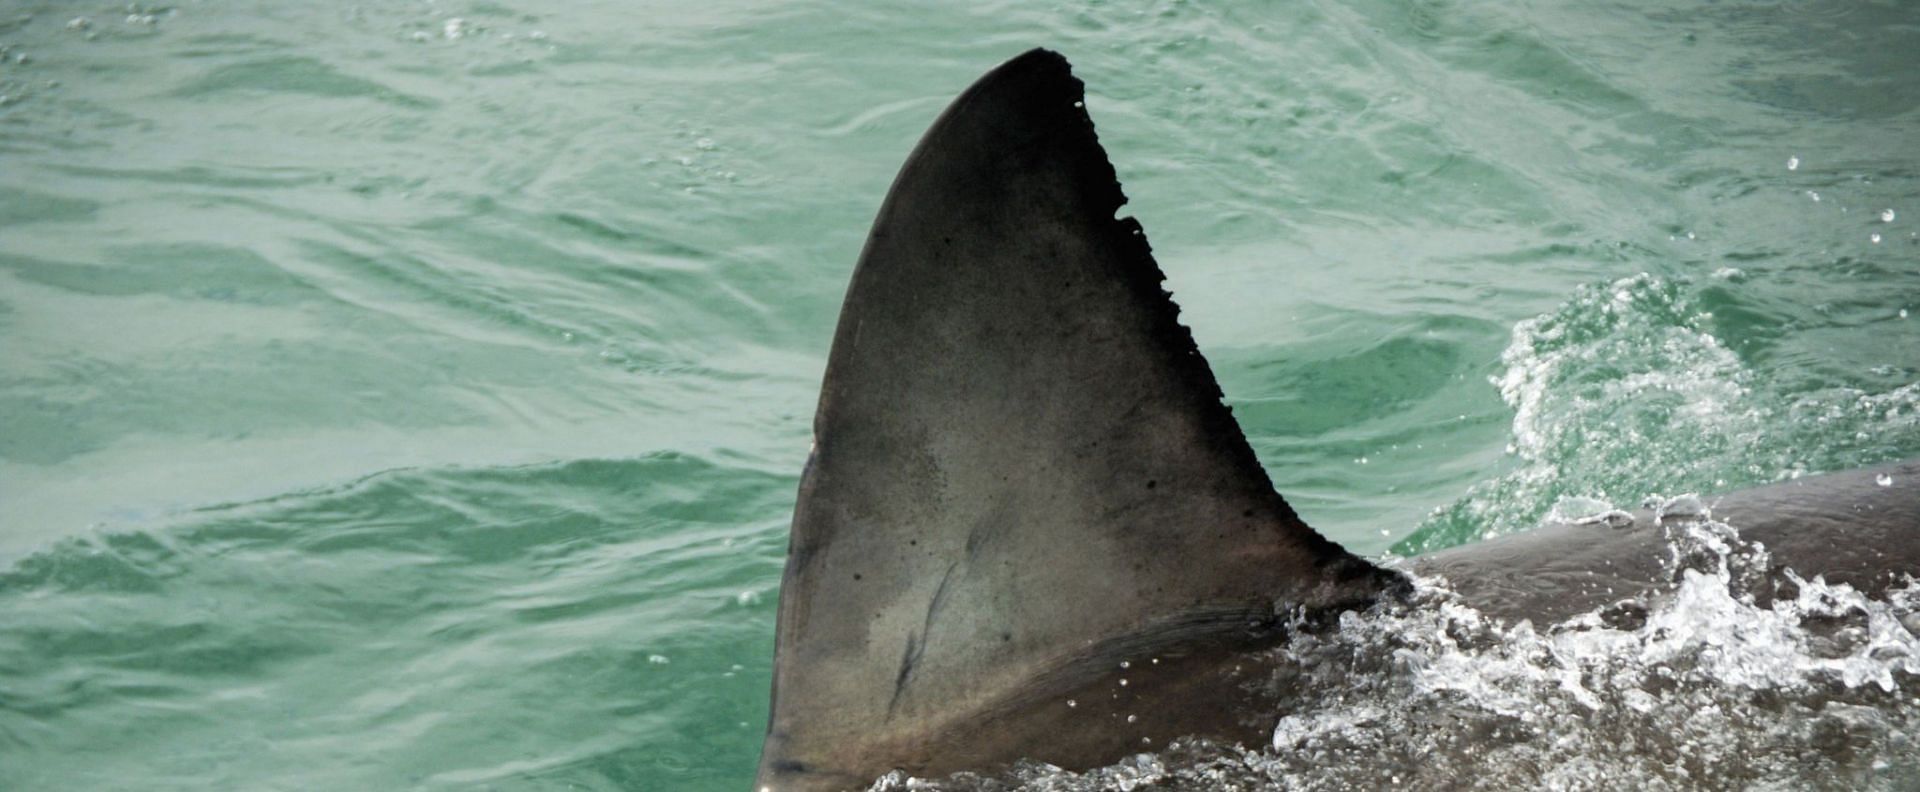 Sydney Shark Attack Video Swimmer Dies After Being Eaten By Predator In Viral Little Bay Footage